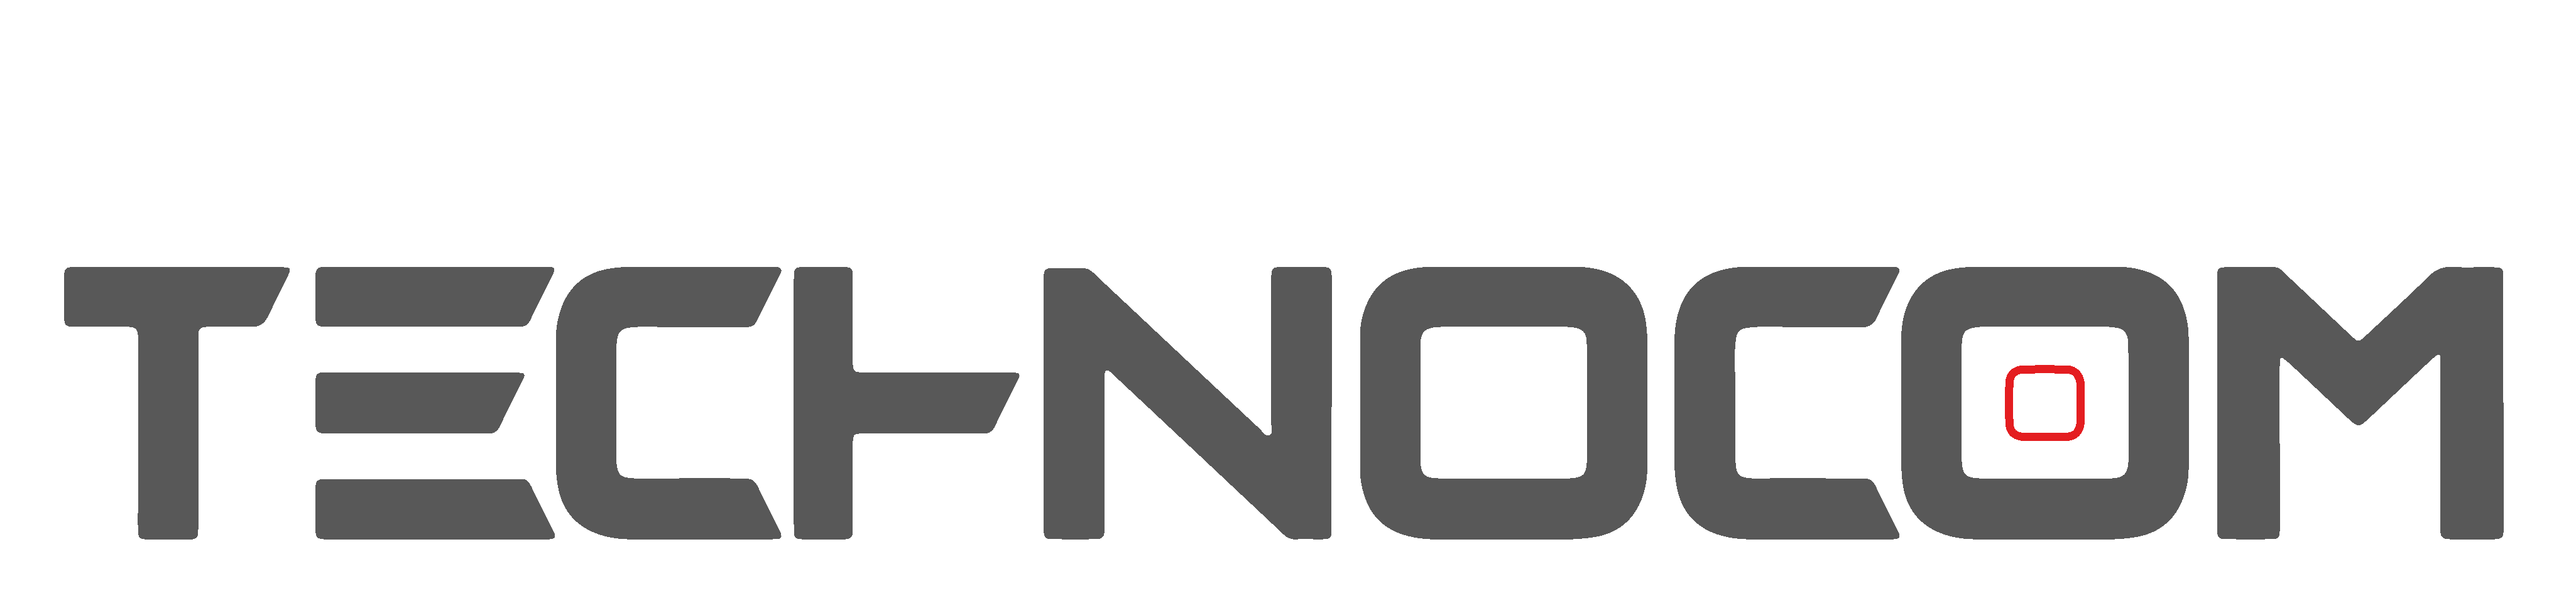 Technocom Logo